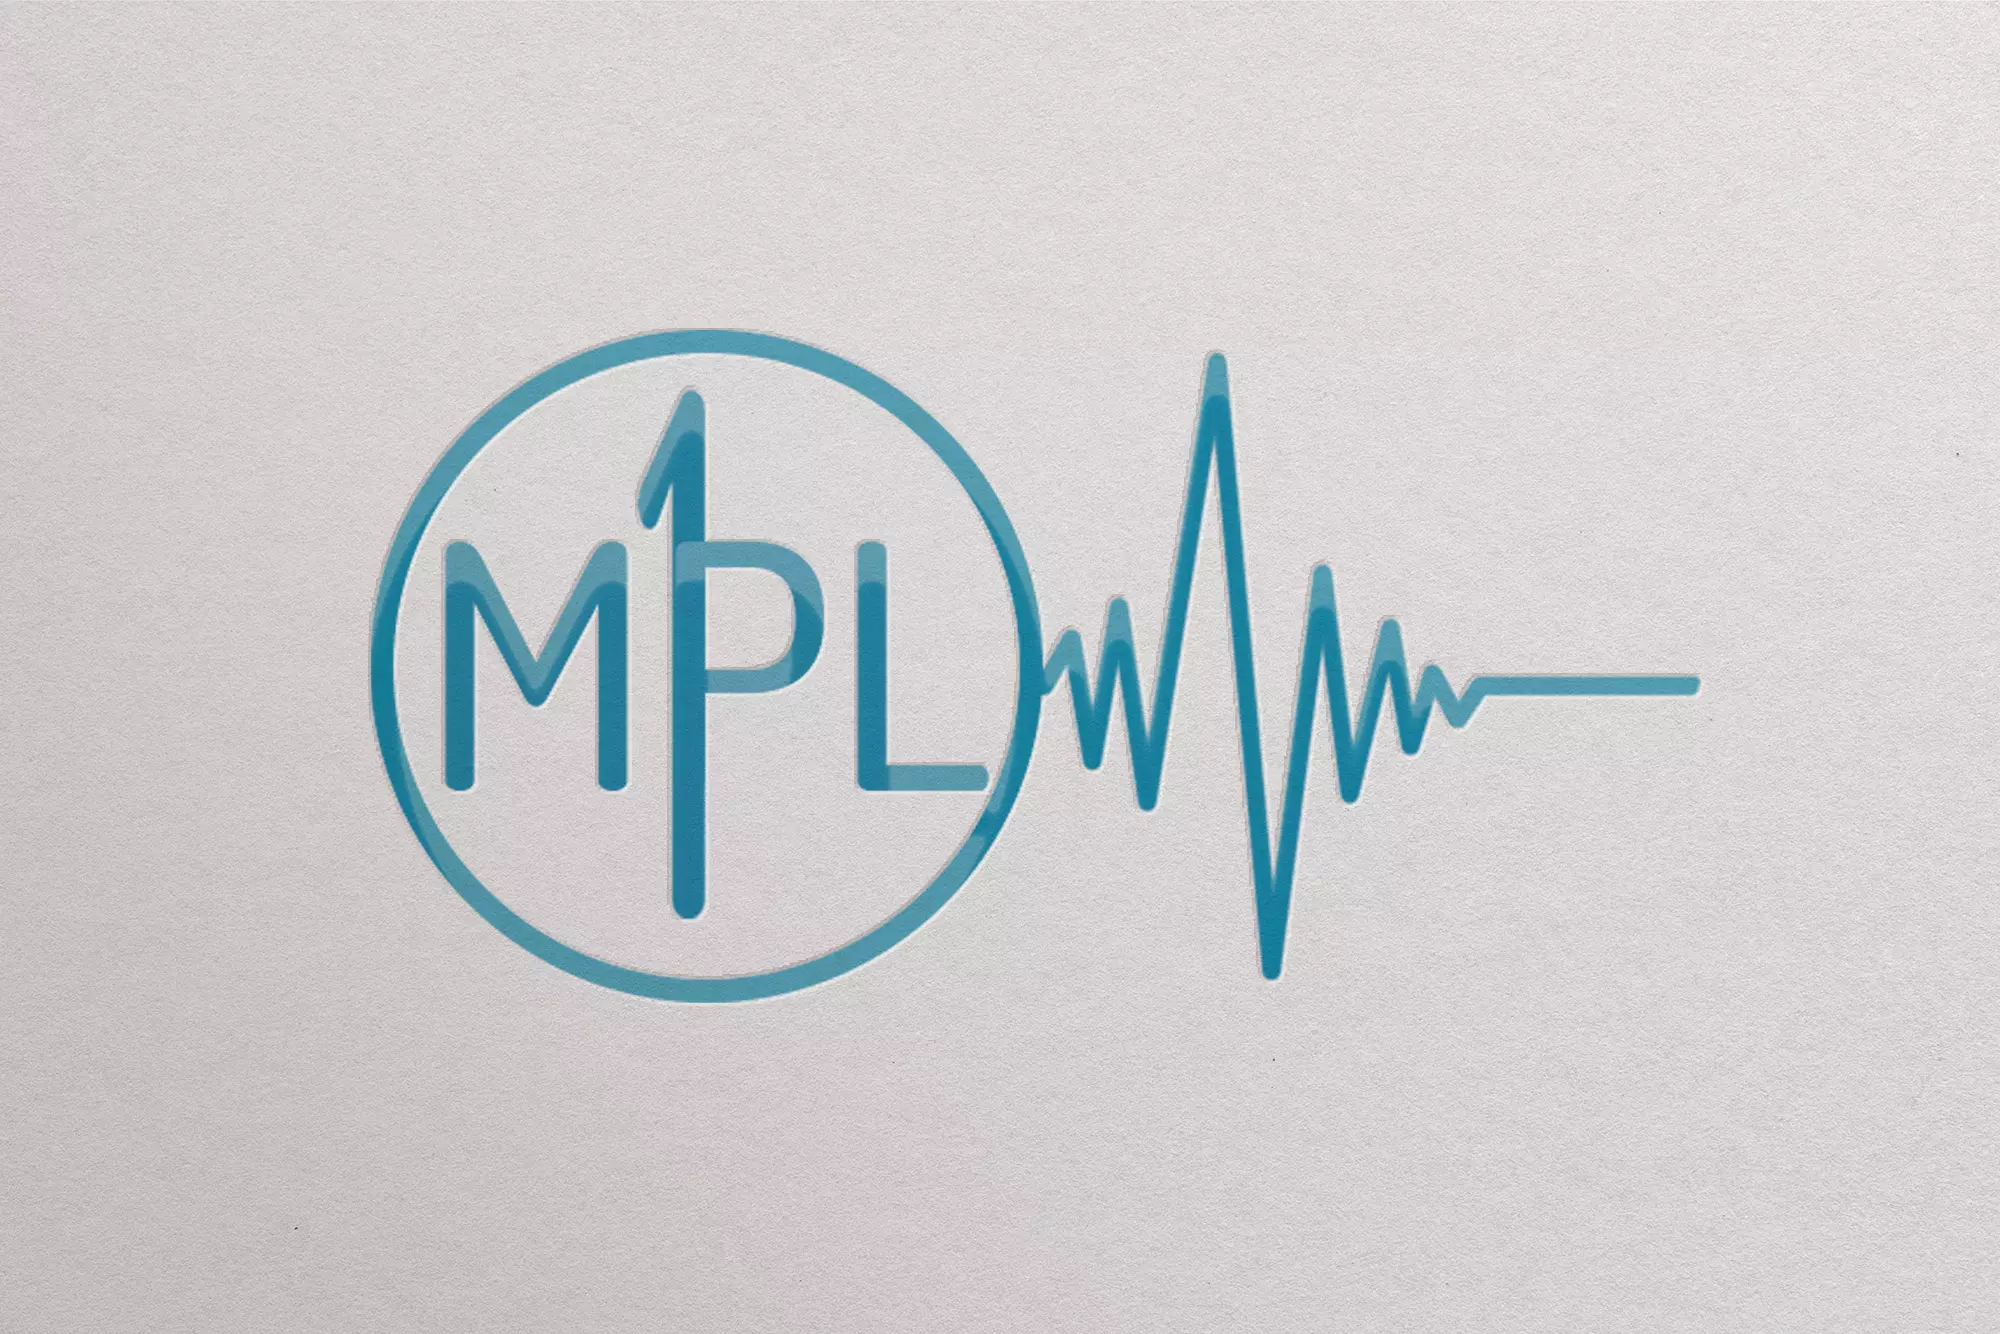 MPL - wizualizacja loga